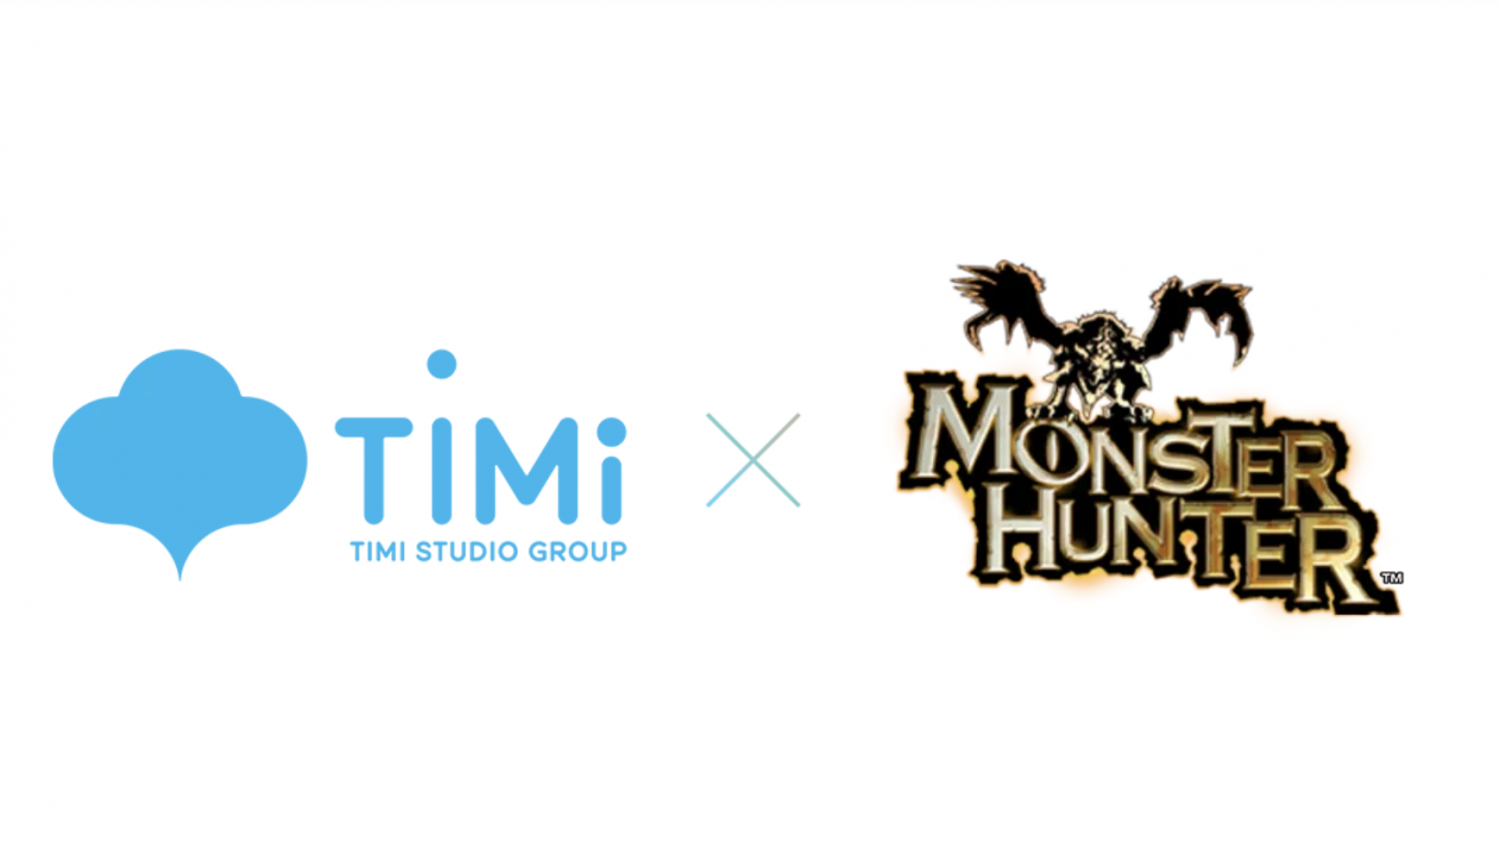 TiMi x Monster Hunter mobile game